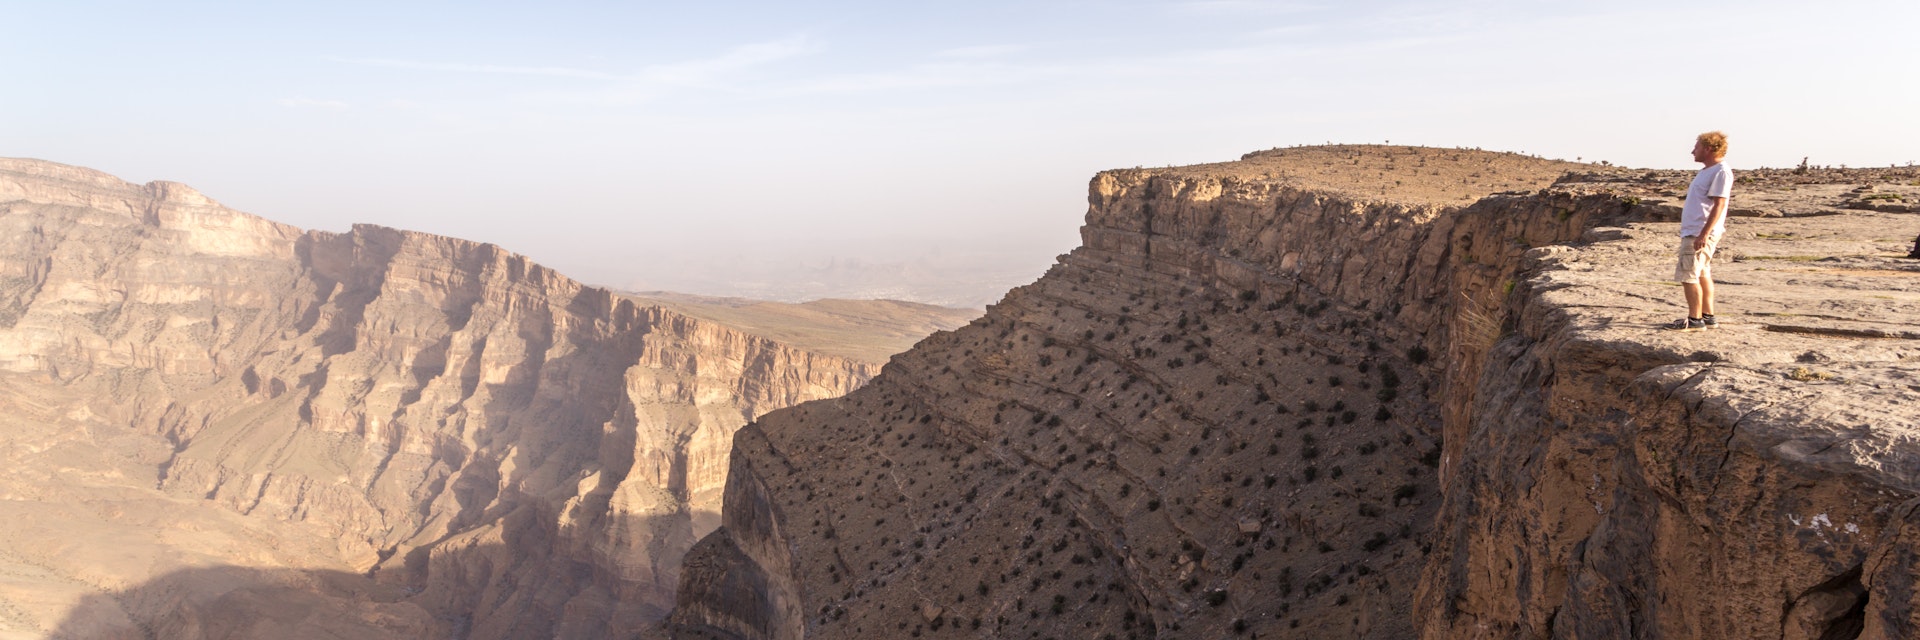 Man standing on the edge of Jebel Akhdar canyon